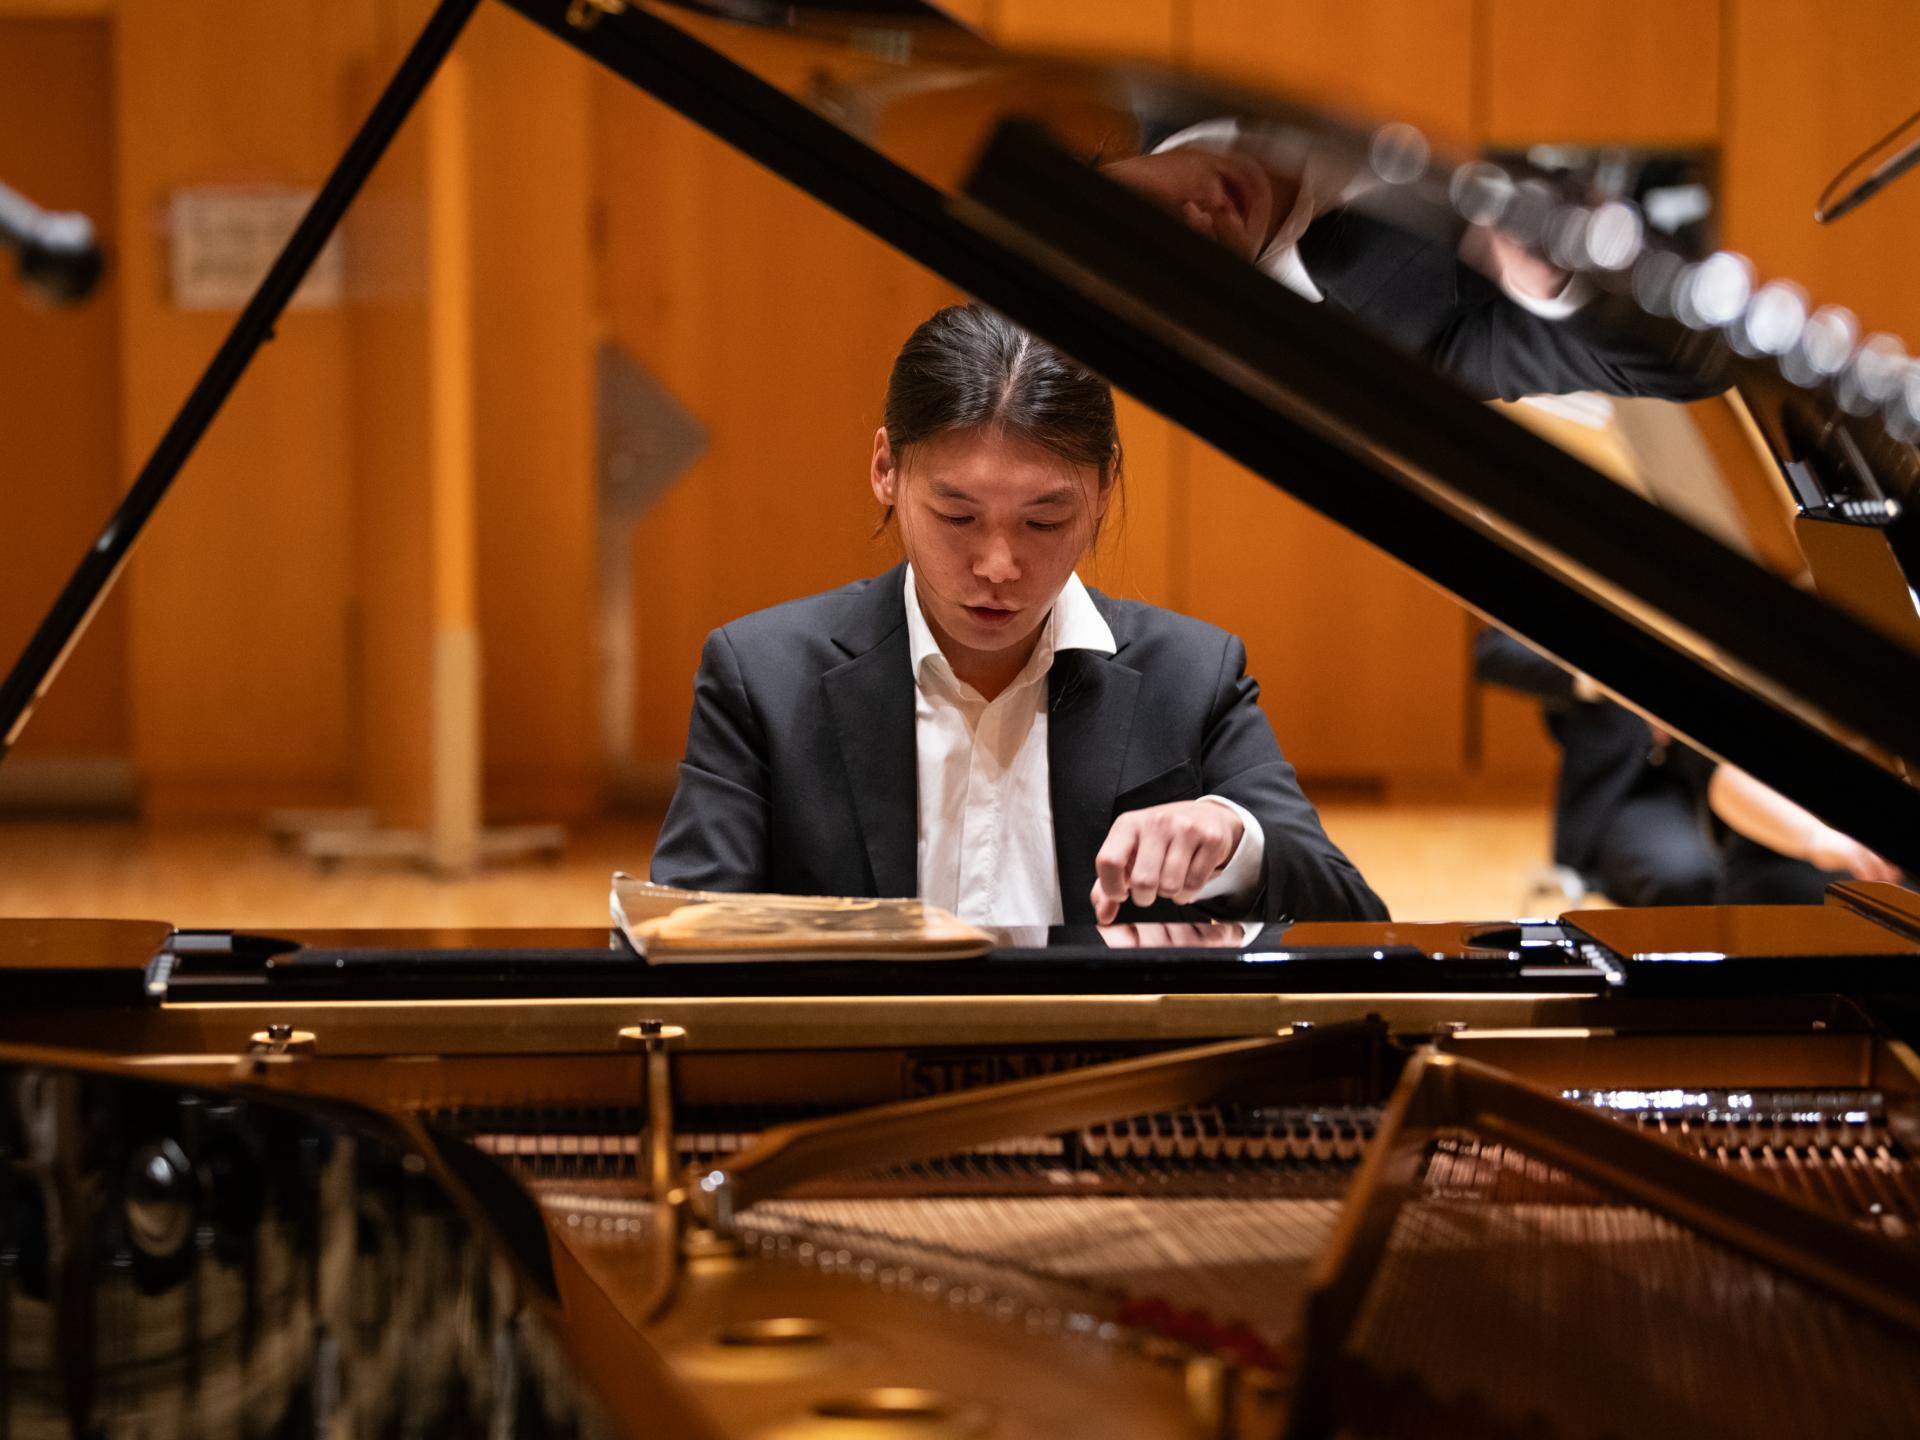 Der Pianist Jaekyoung Lee